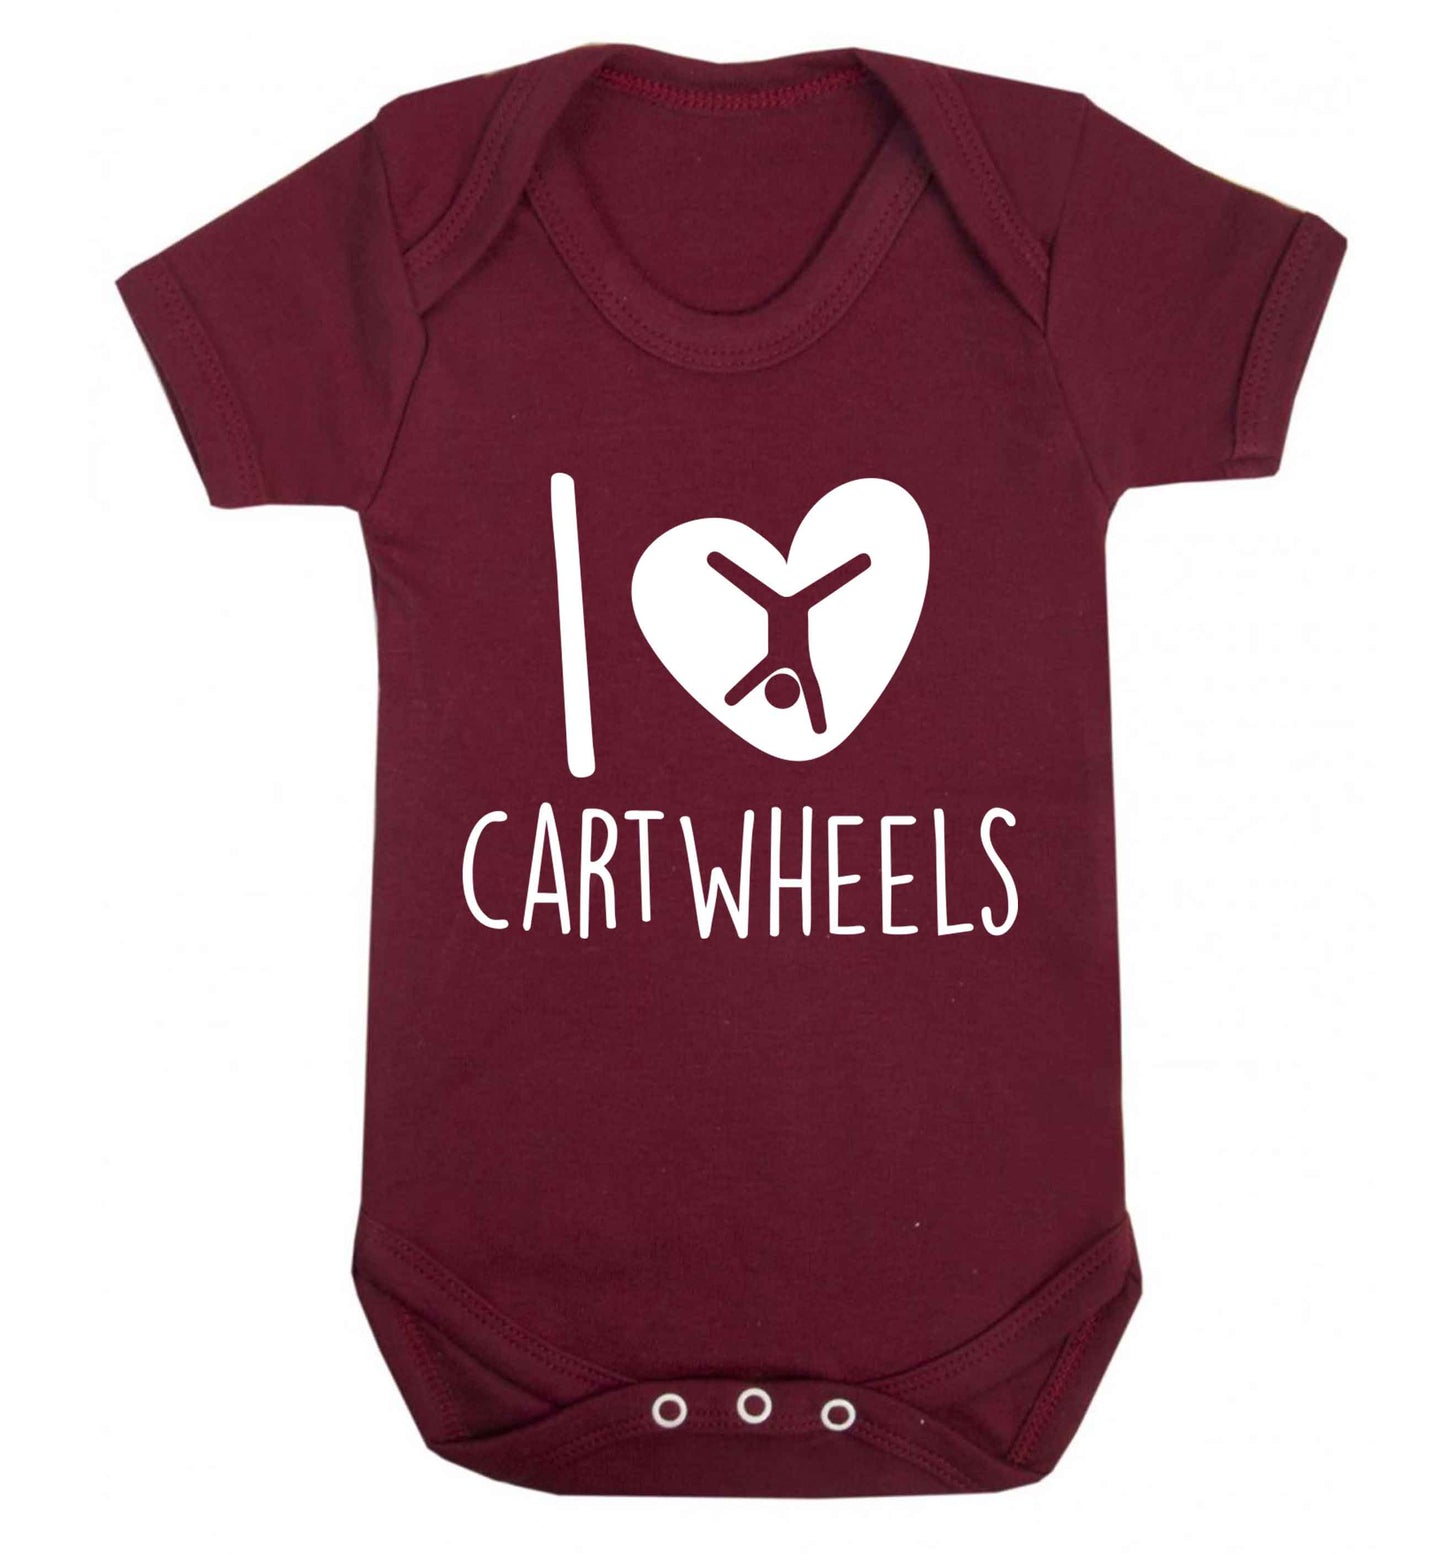 I love cartwheels Baby Vest maroon 18-24 months